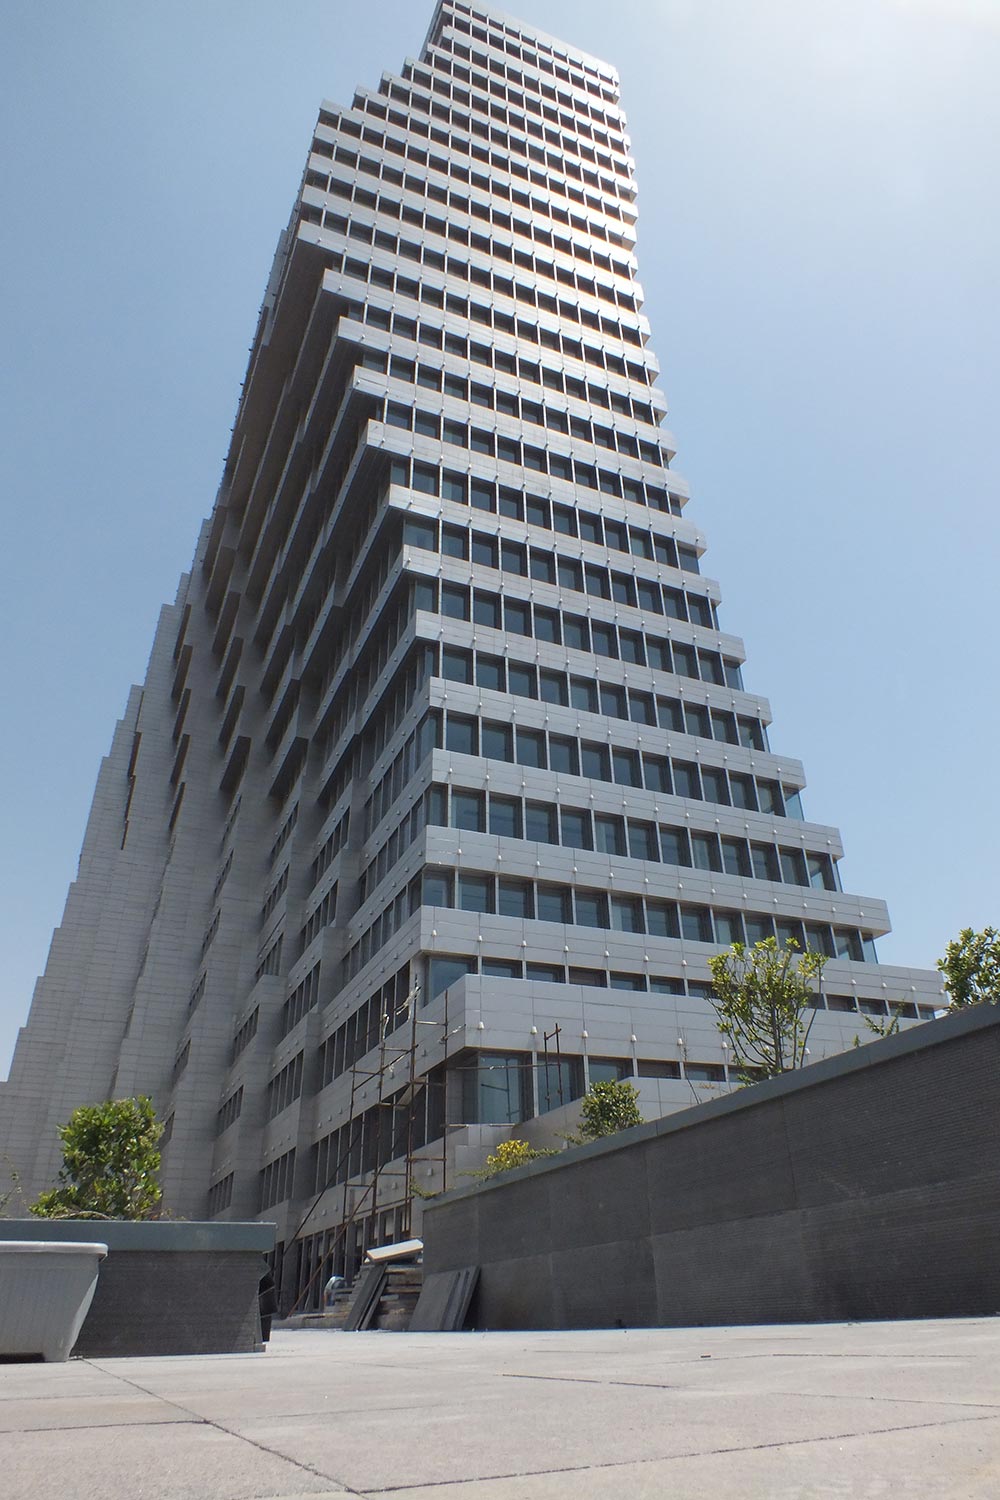 Tallest Office Buildings in Iran